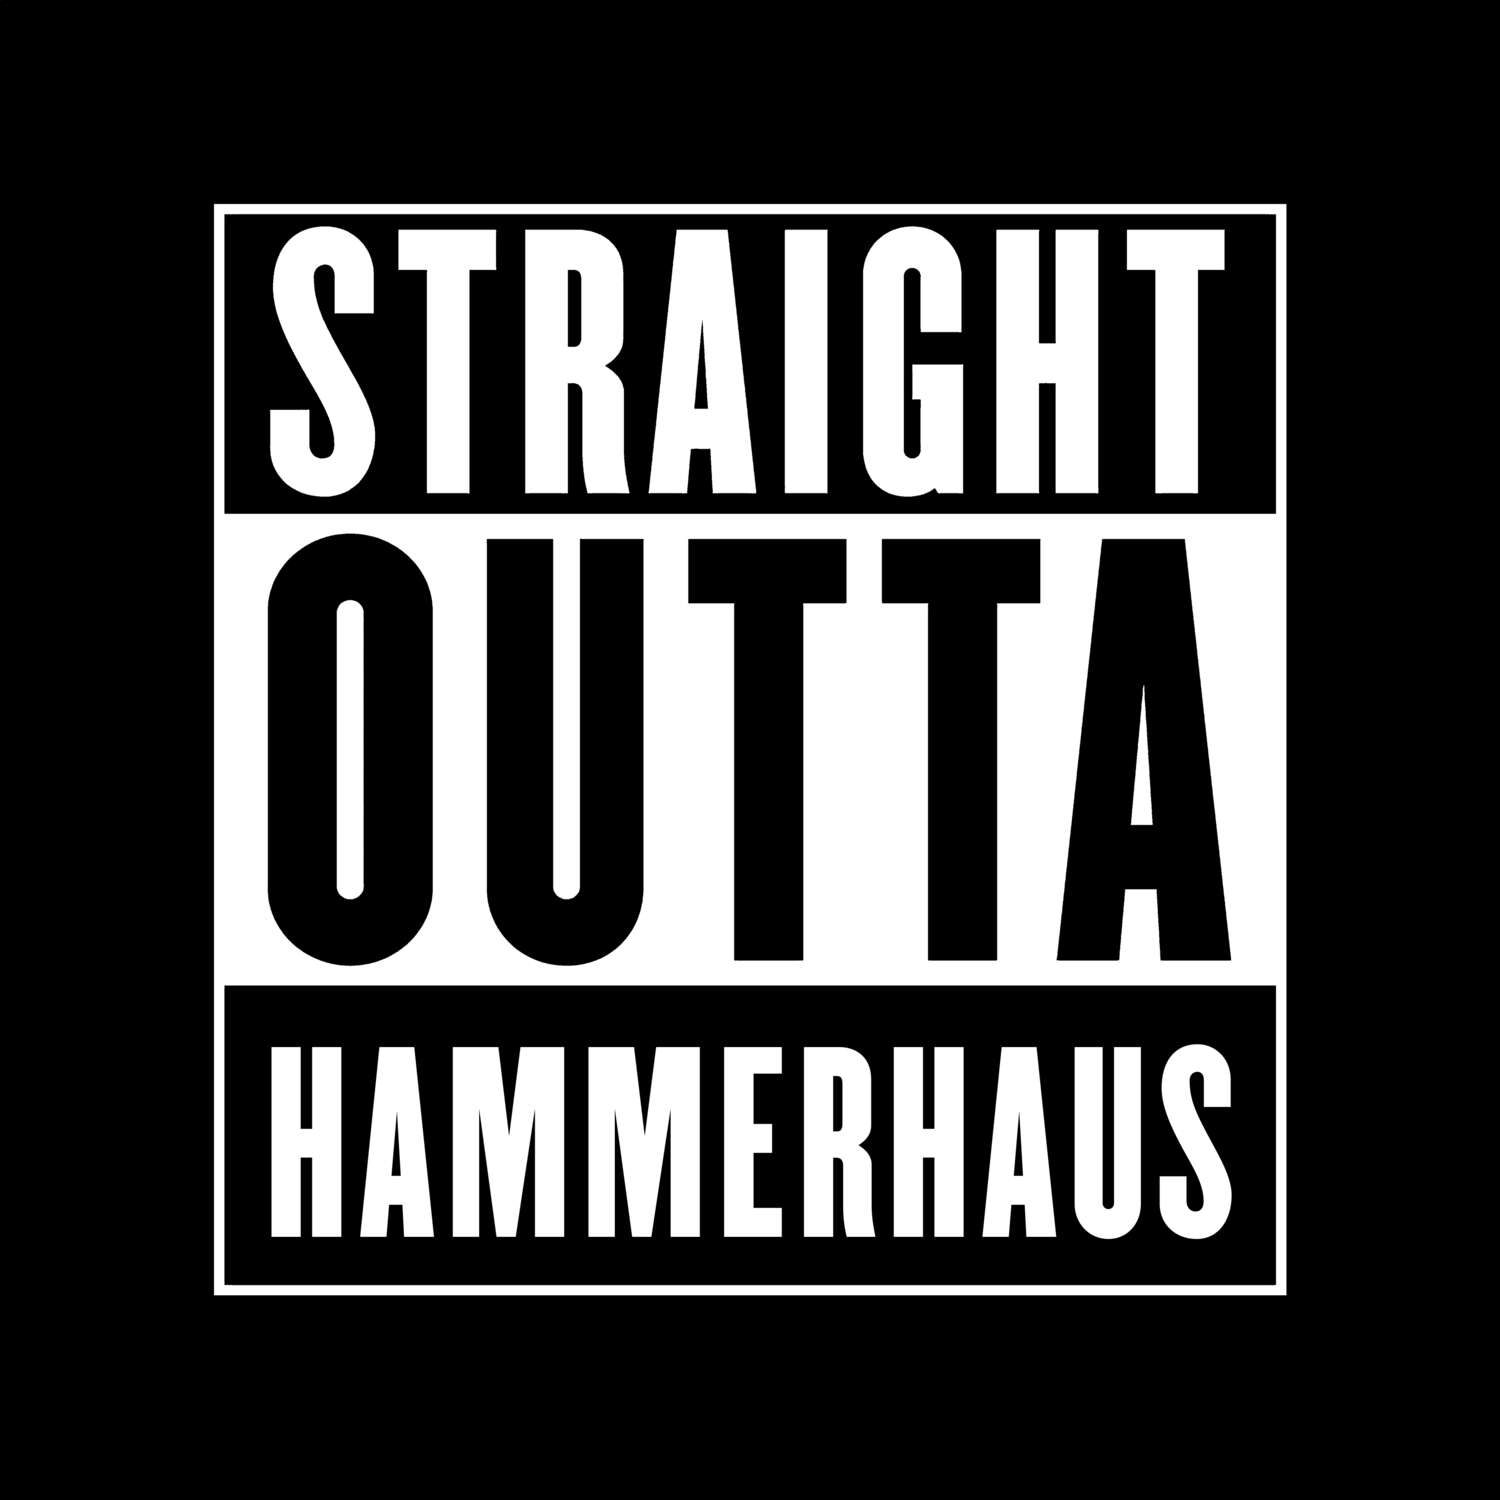 Hammerhaus T-Shirt »Straight Outta«